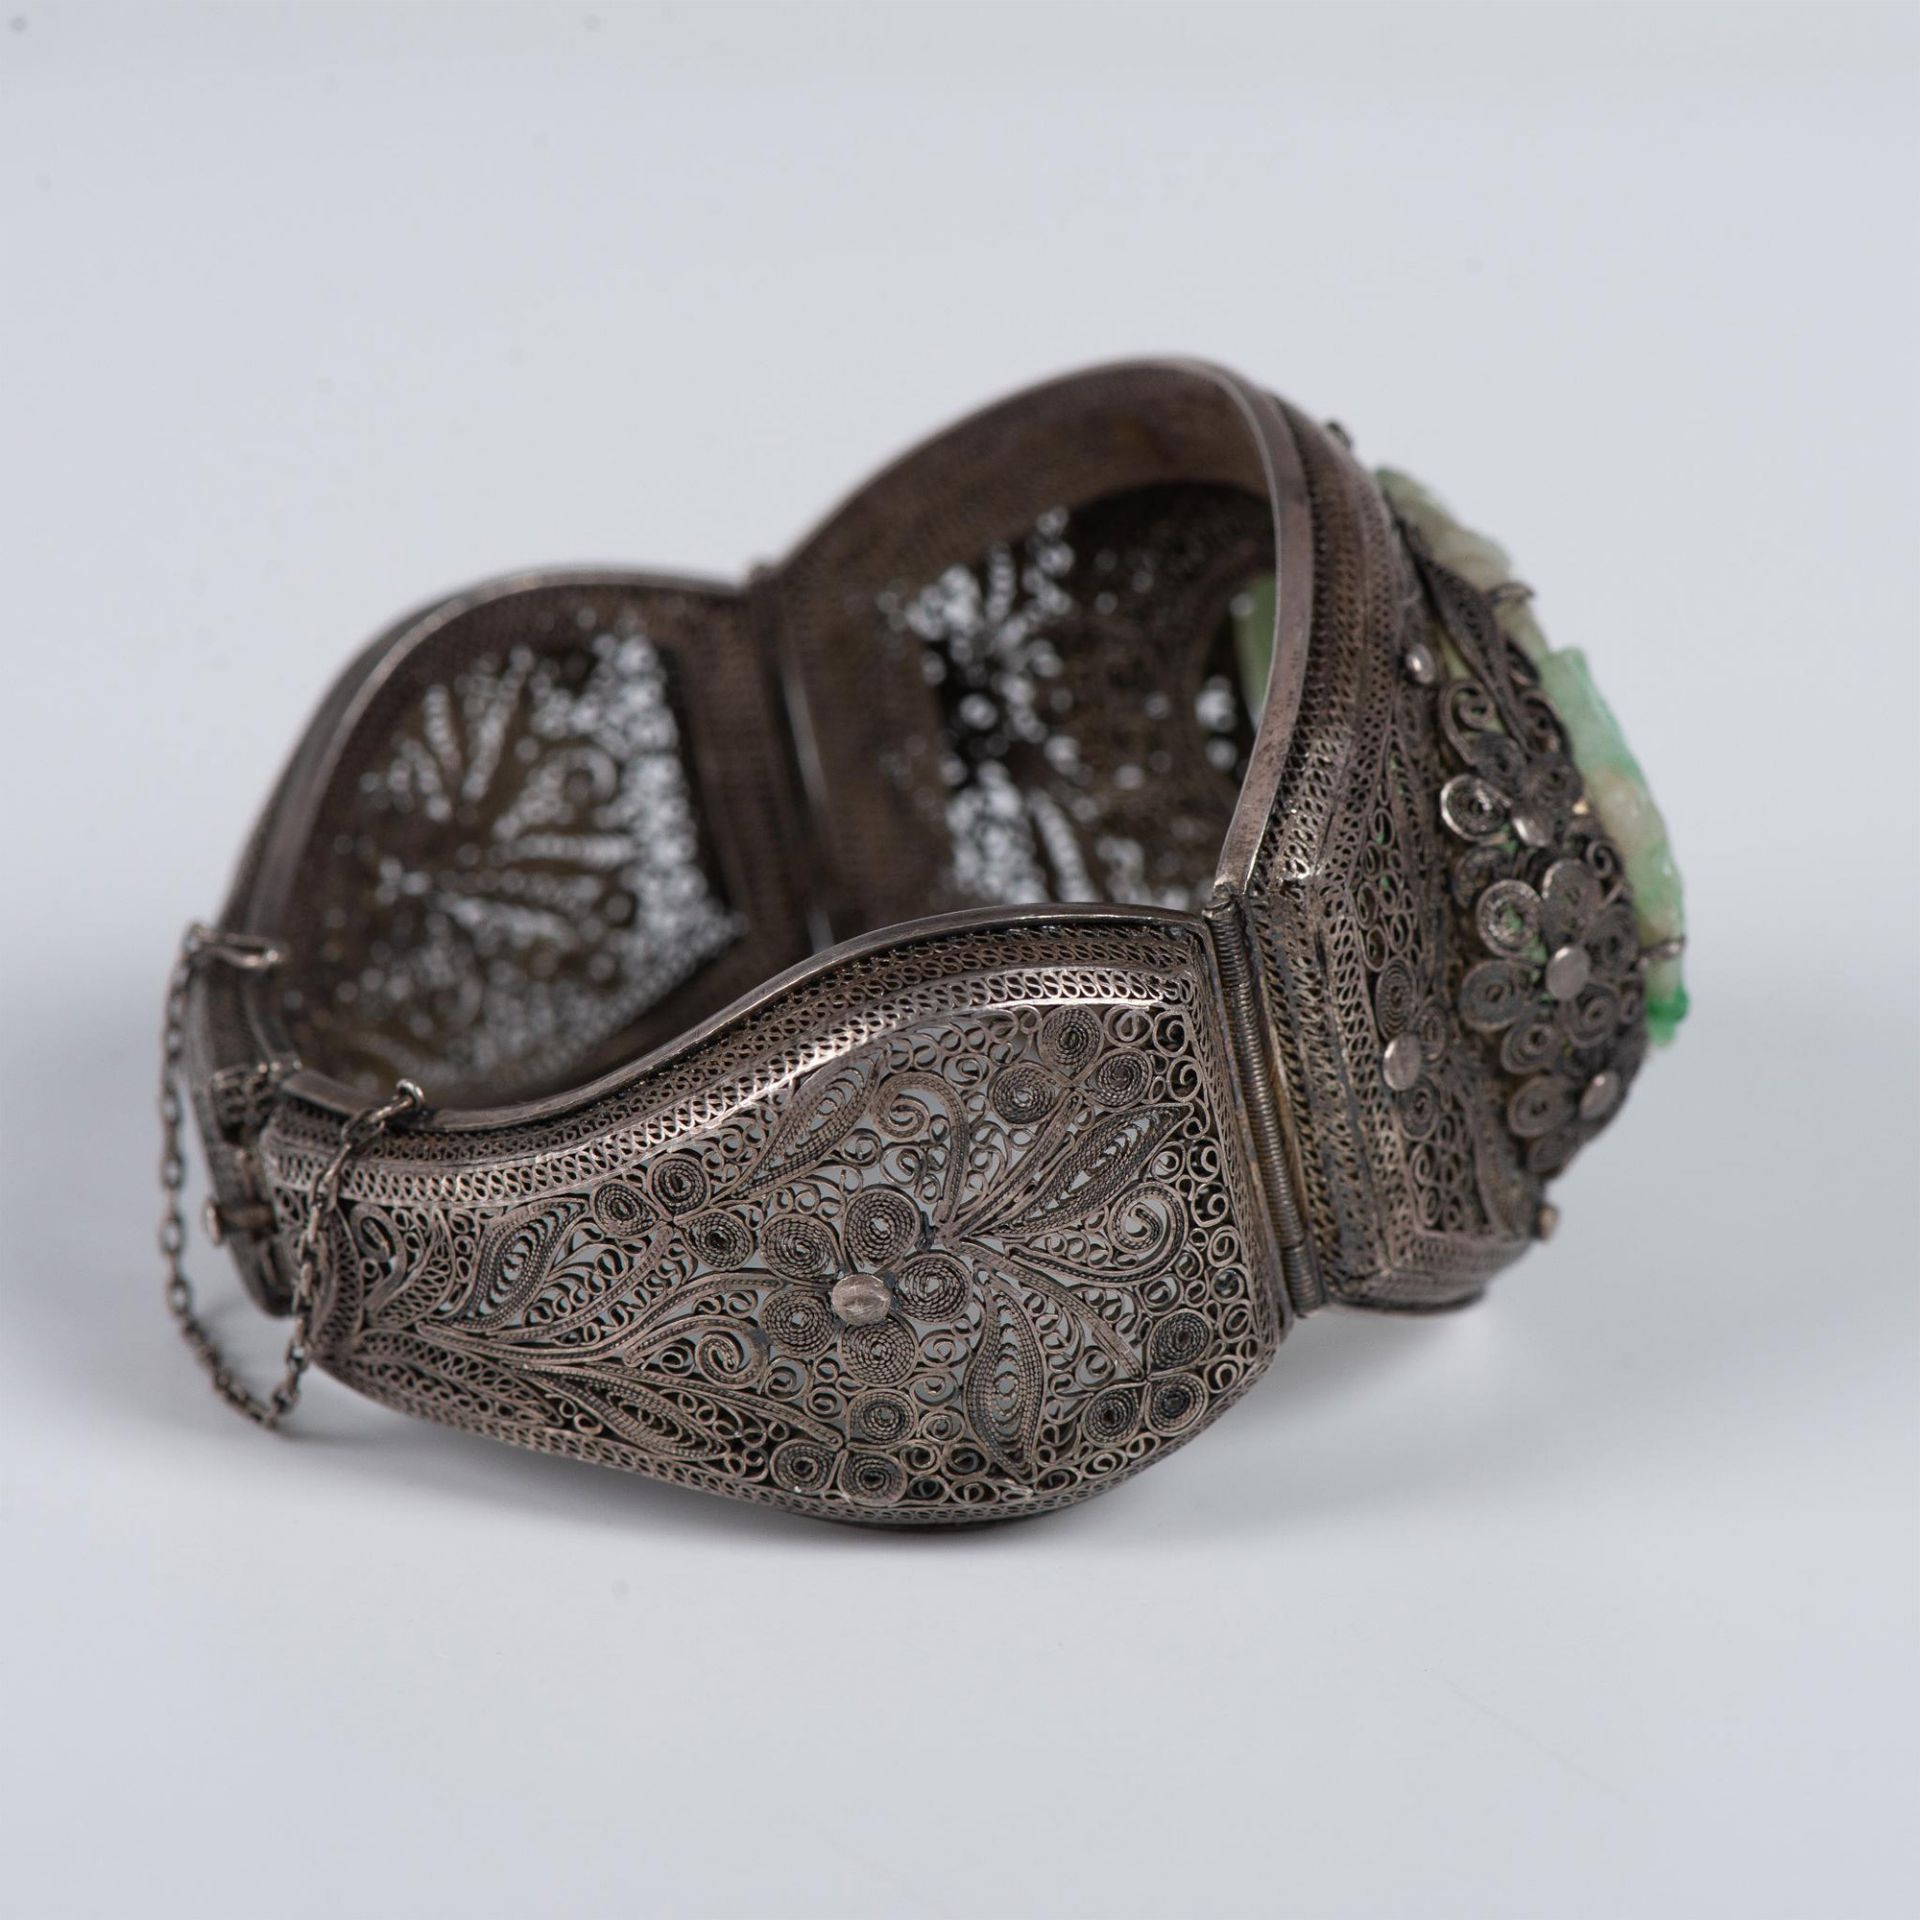 Vintage Chinese Silver Jadeite Bracelet - Image 4 of 6